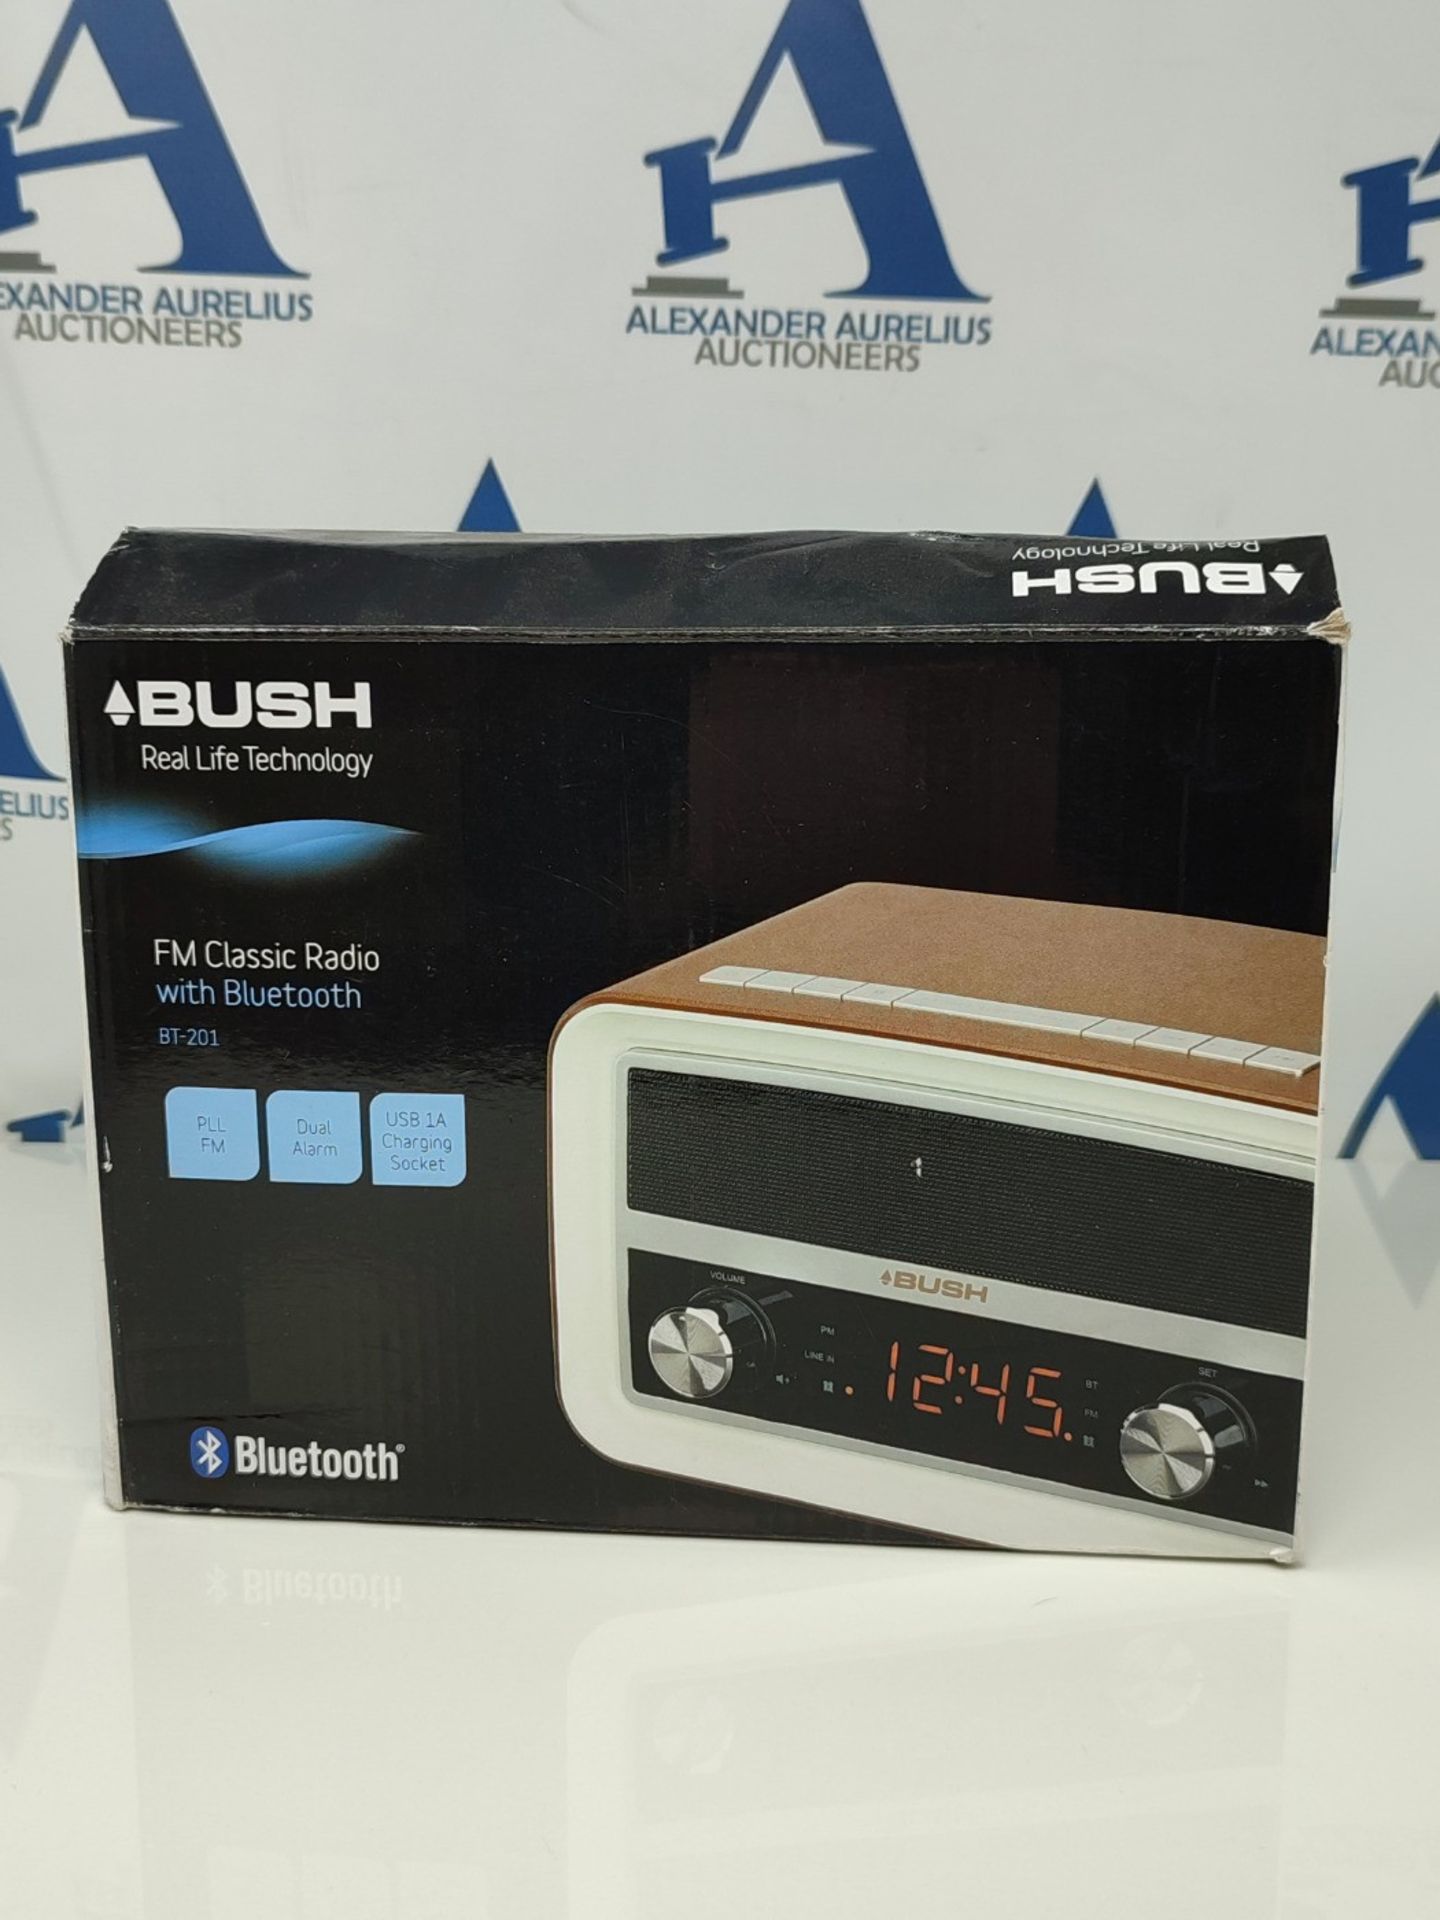 Bush model no. BT-201 FM classic radio with bluetooth